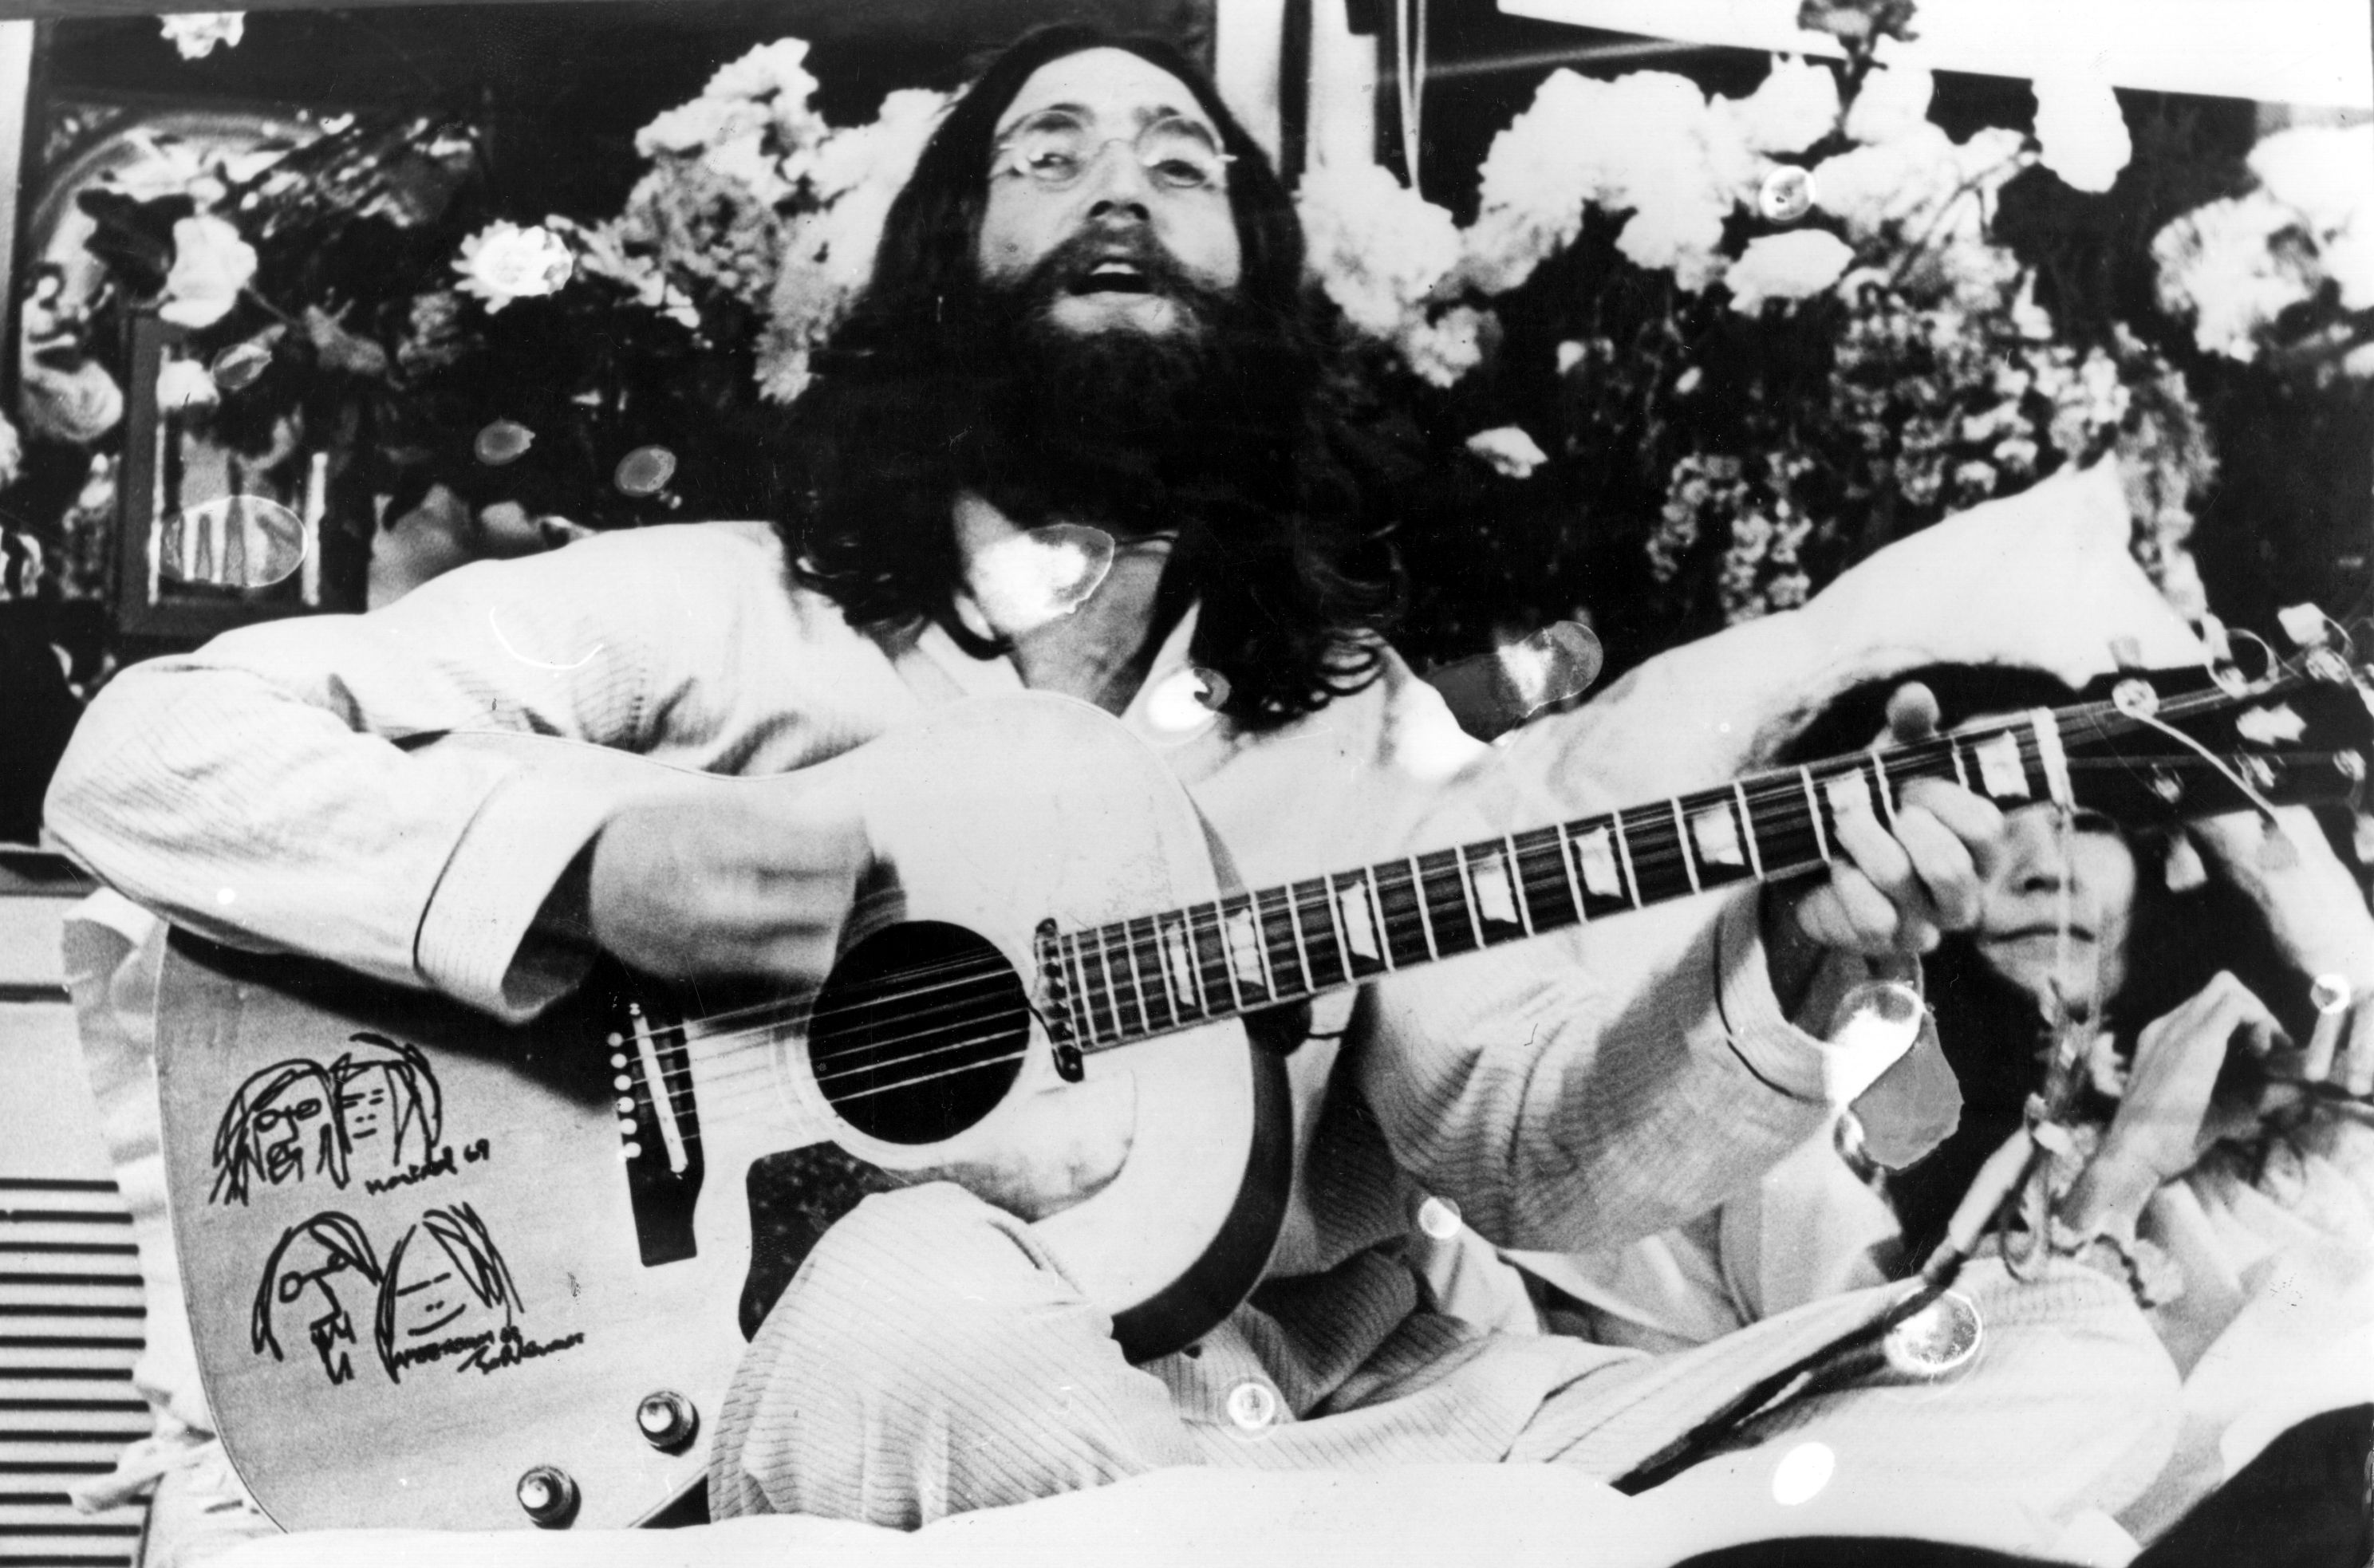 "Give Peace a Chance" singer John Lennon with a beard